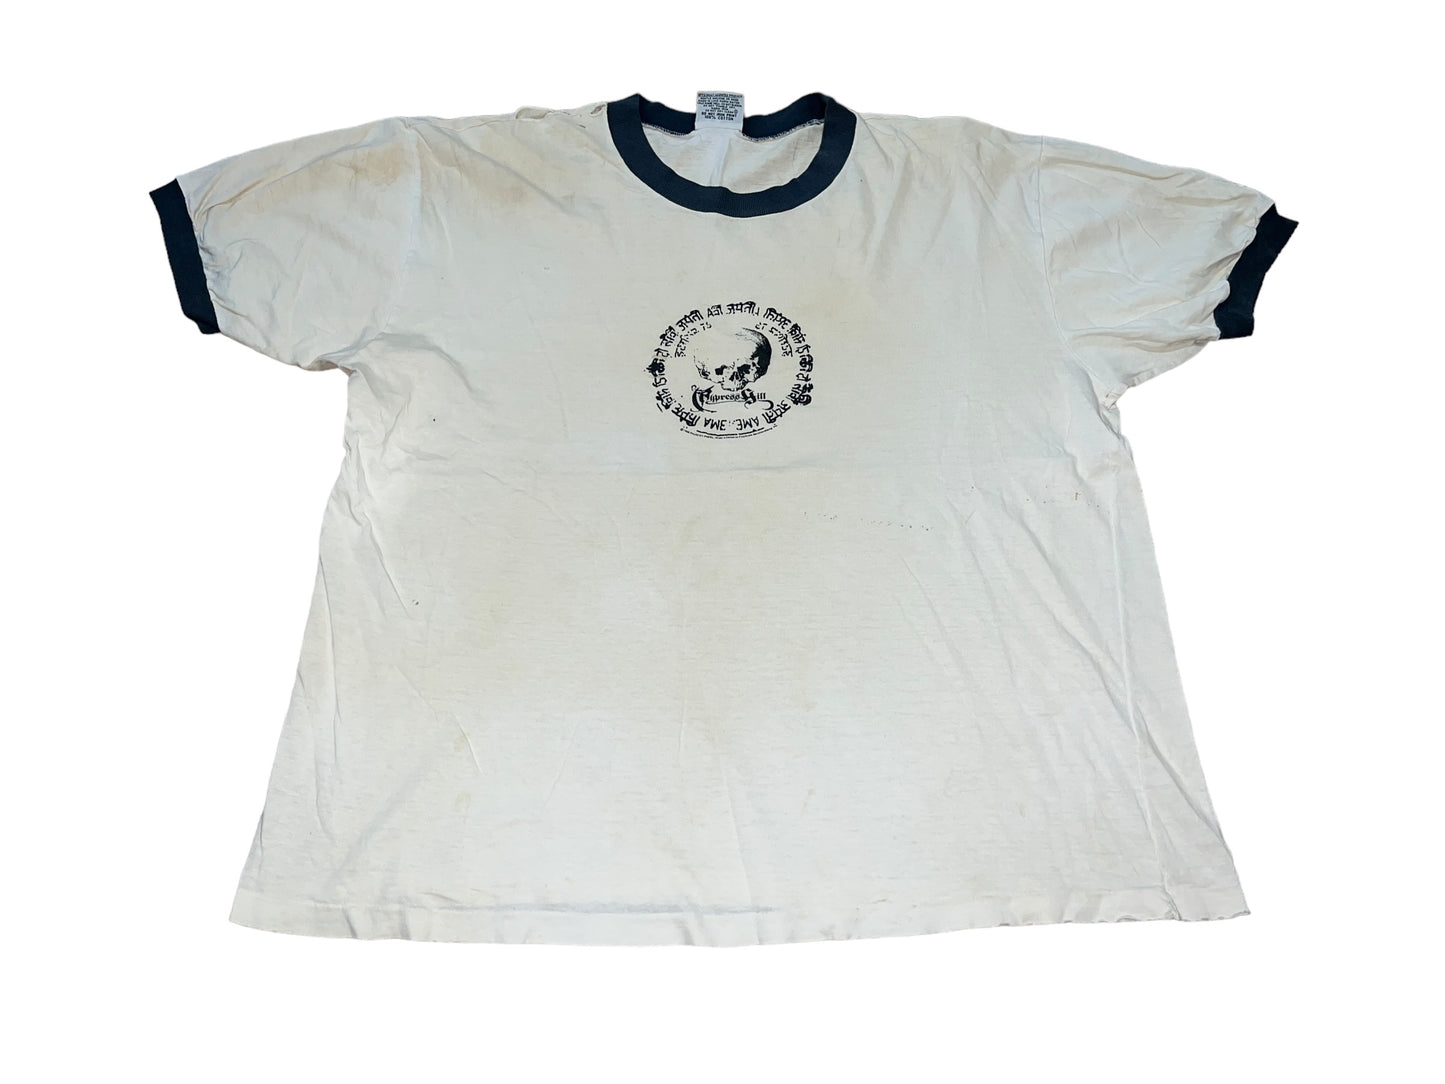 Vintage 1996 Cypress Hill T-Shirt